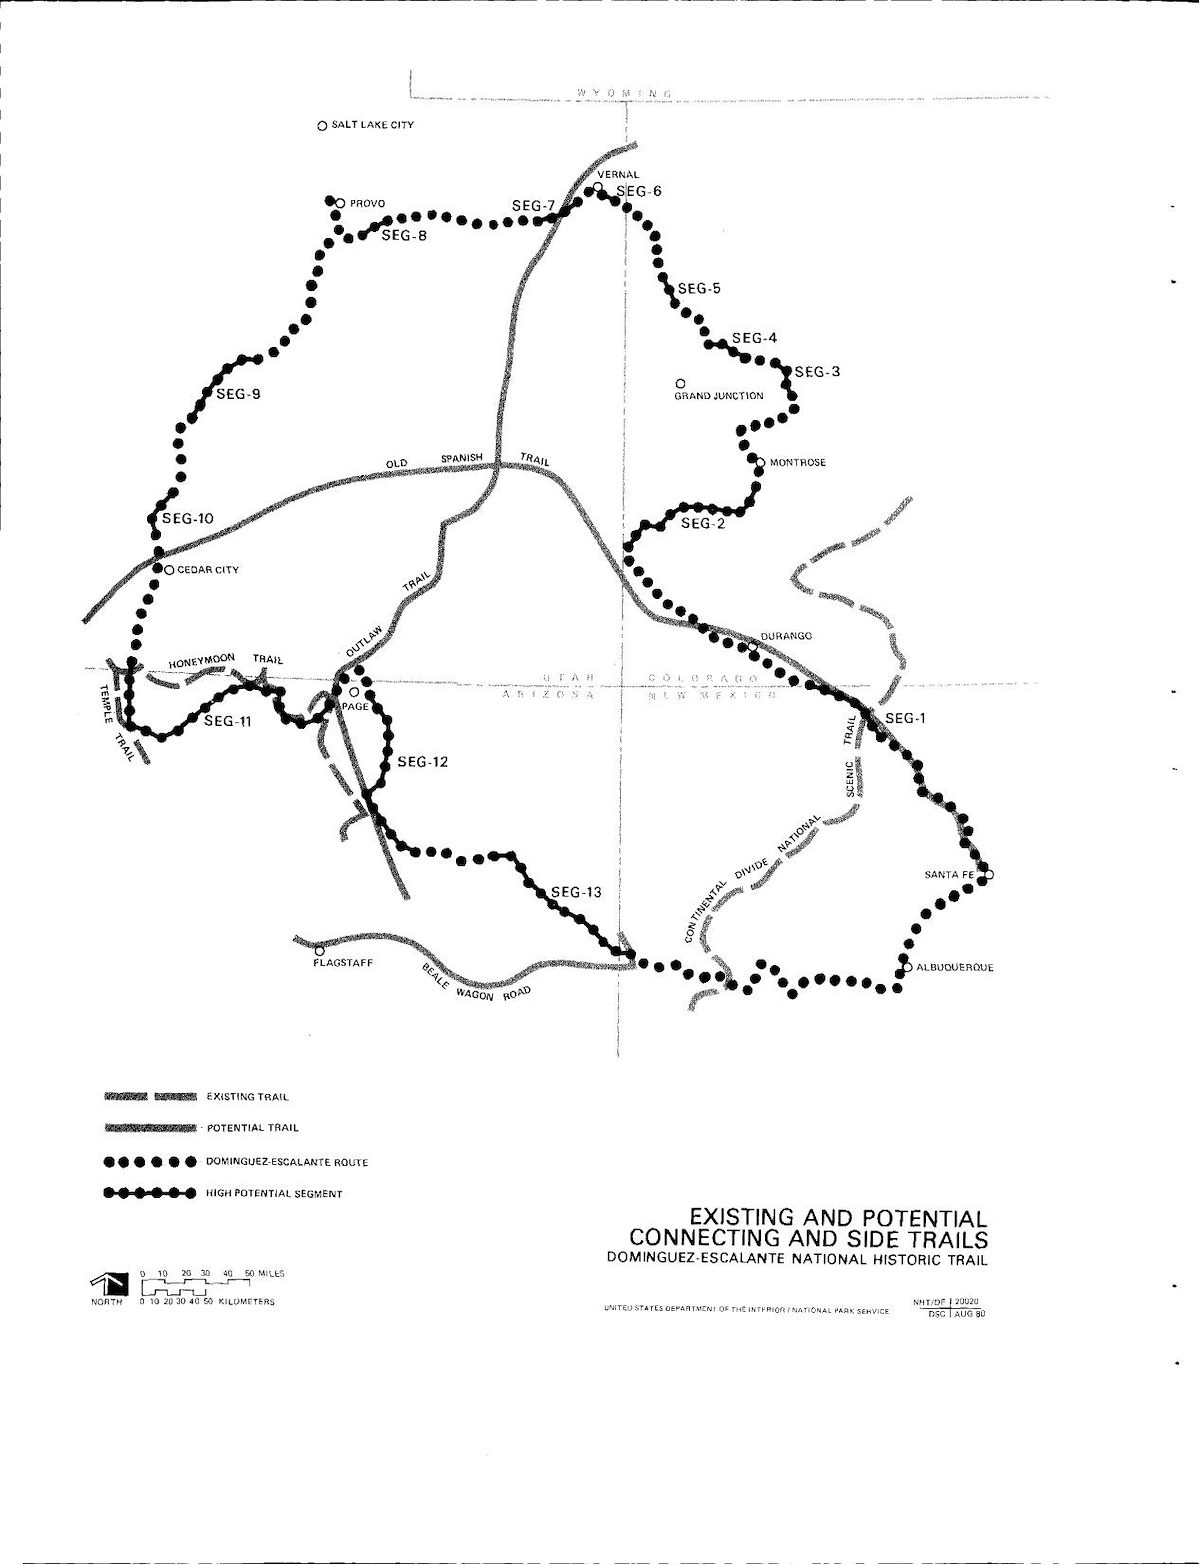 Dominguez-Escalante Expedition Route, Dominguez-Escalante National Historic Trail, Draft National Historic Trail Study